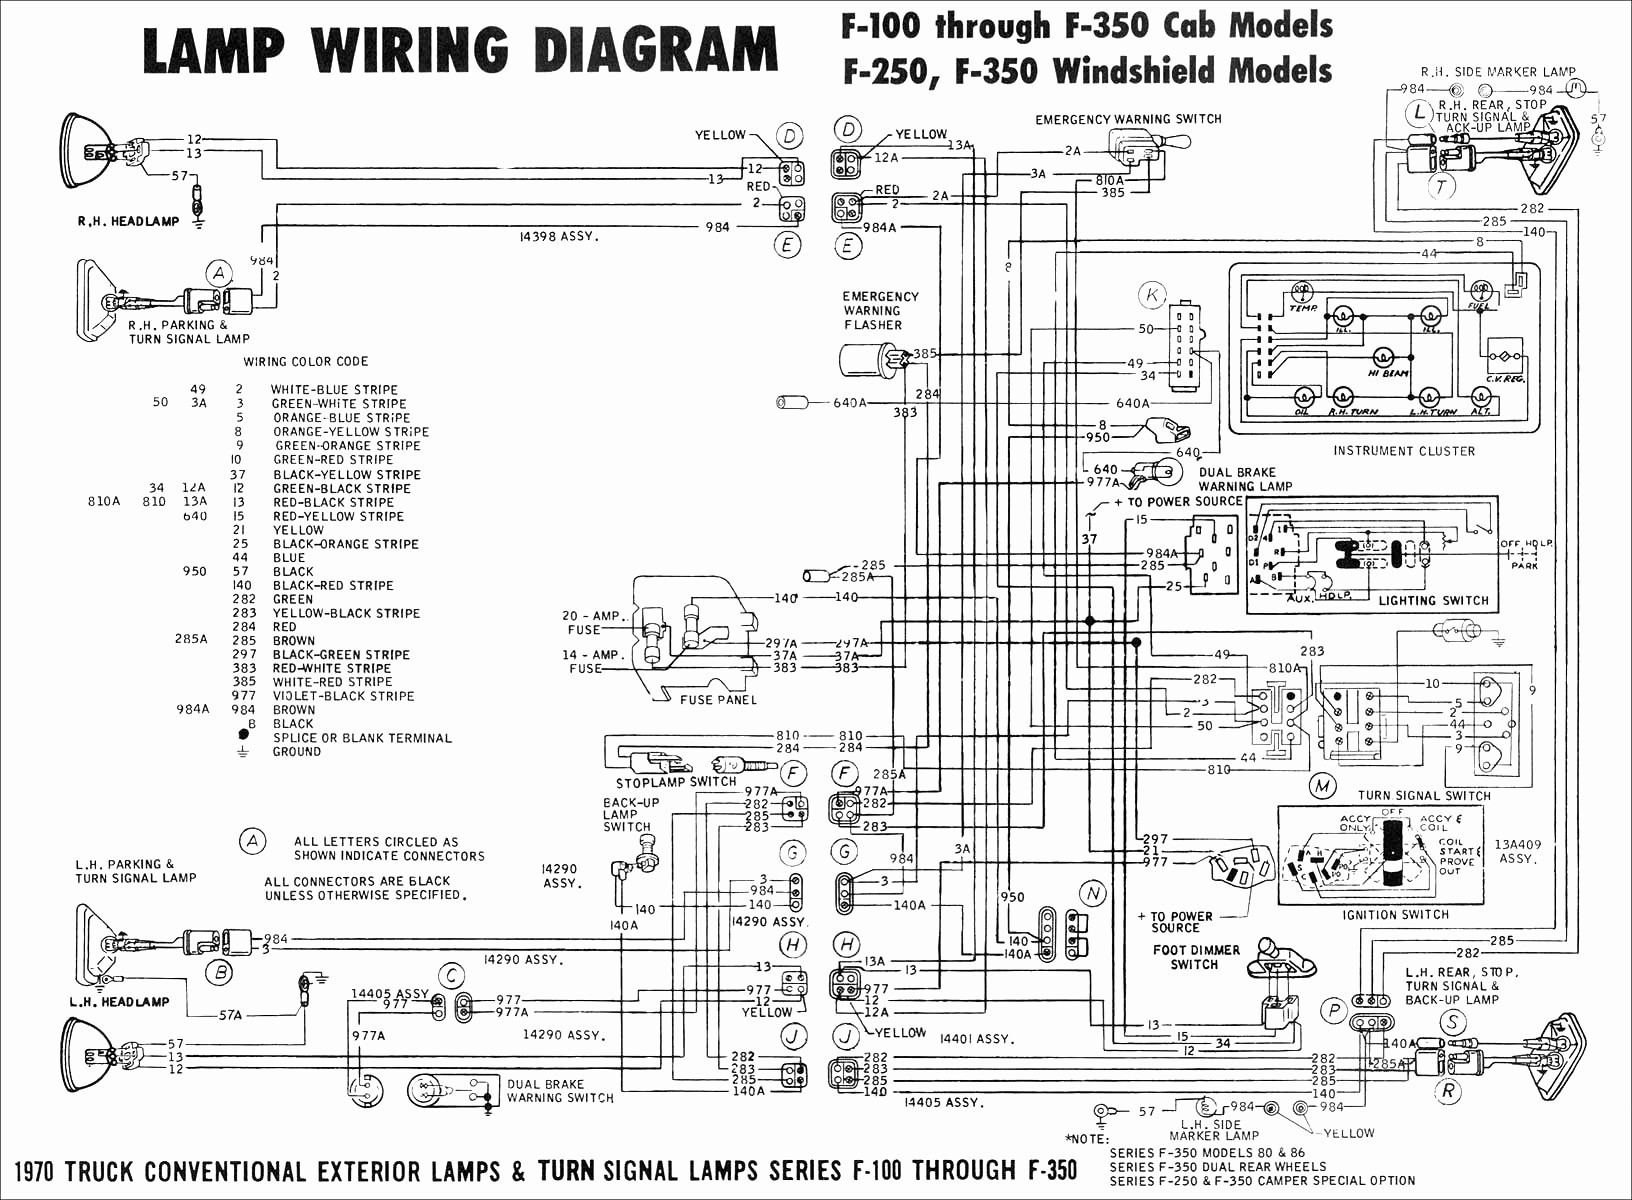 Volvo S70 Engine Diagram Volvo Hu 601 Wiring Diagram Wiring Diagram toolbox Of Volvo S70 Engine Diagram